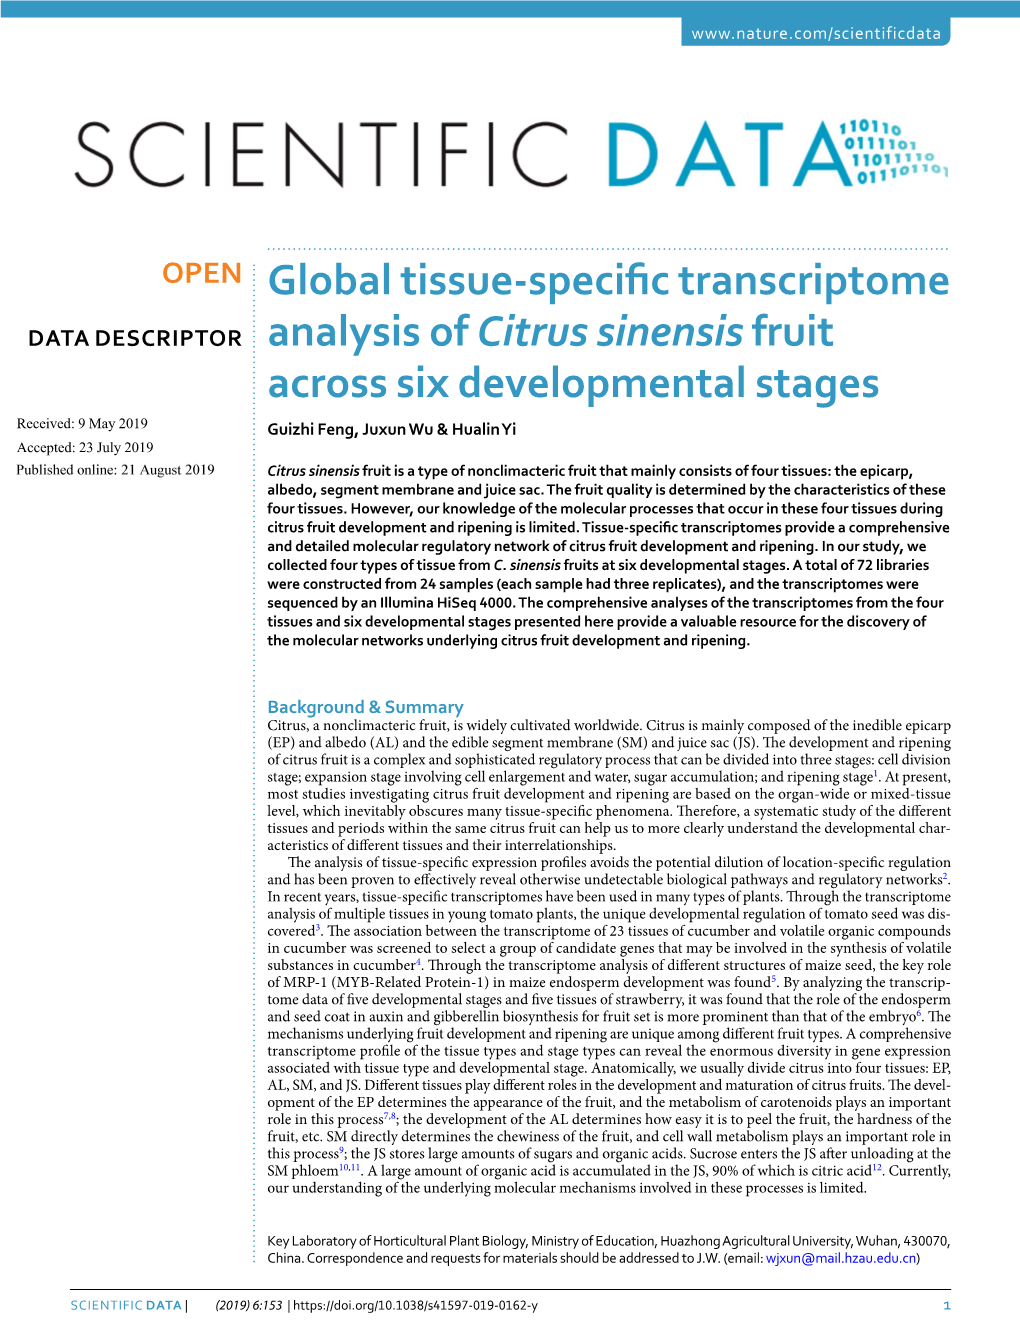 Global Tissue-Specific Transcriptome Analysis of Citrus Sinensis